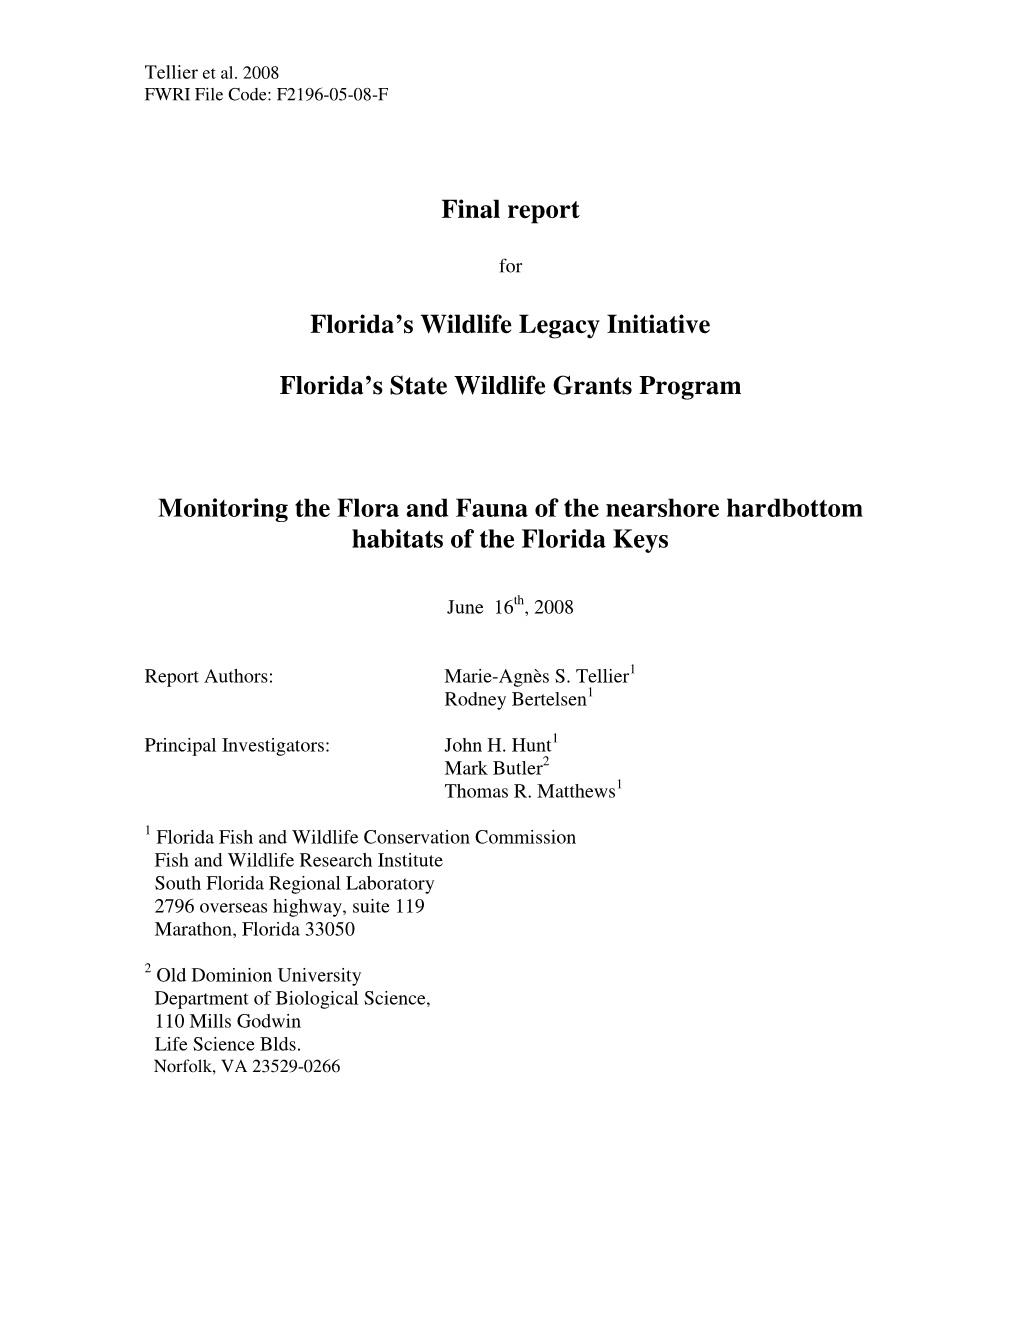 Final Report Florida's Wildlife Legacy Initiative Florida's State Wildlife